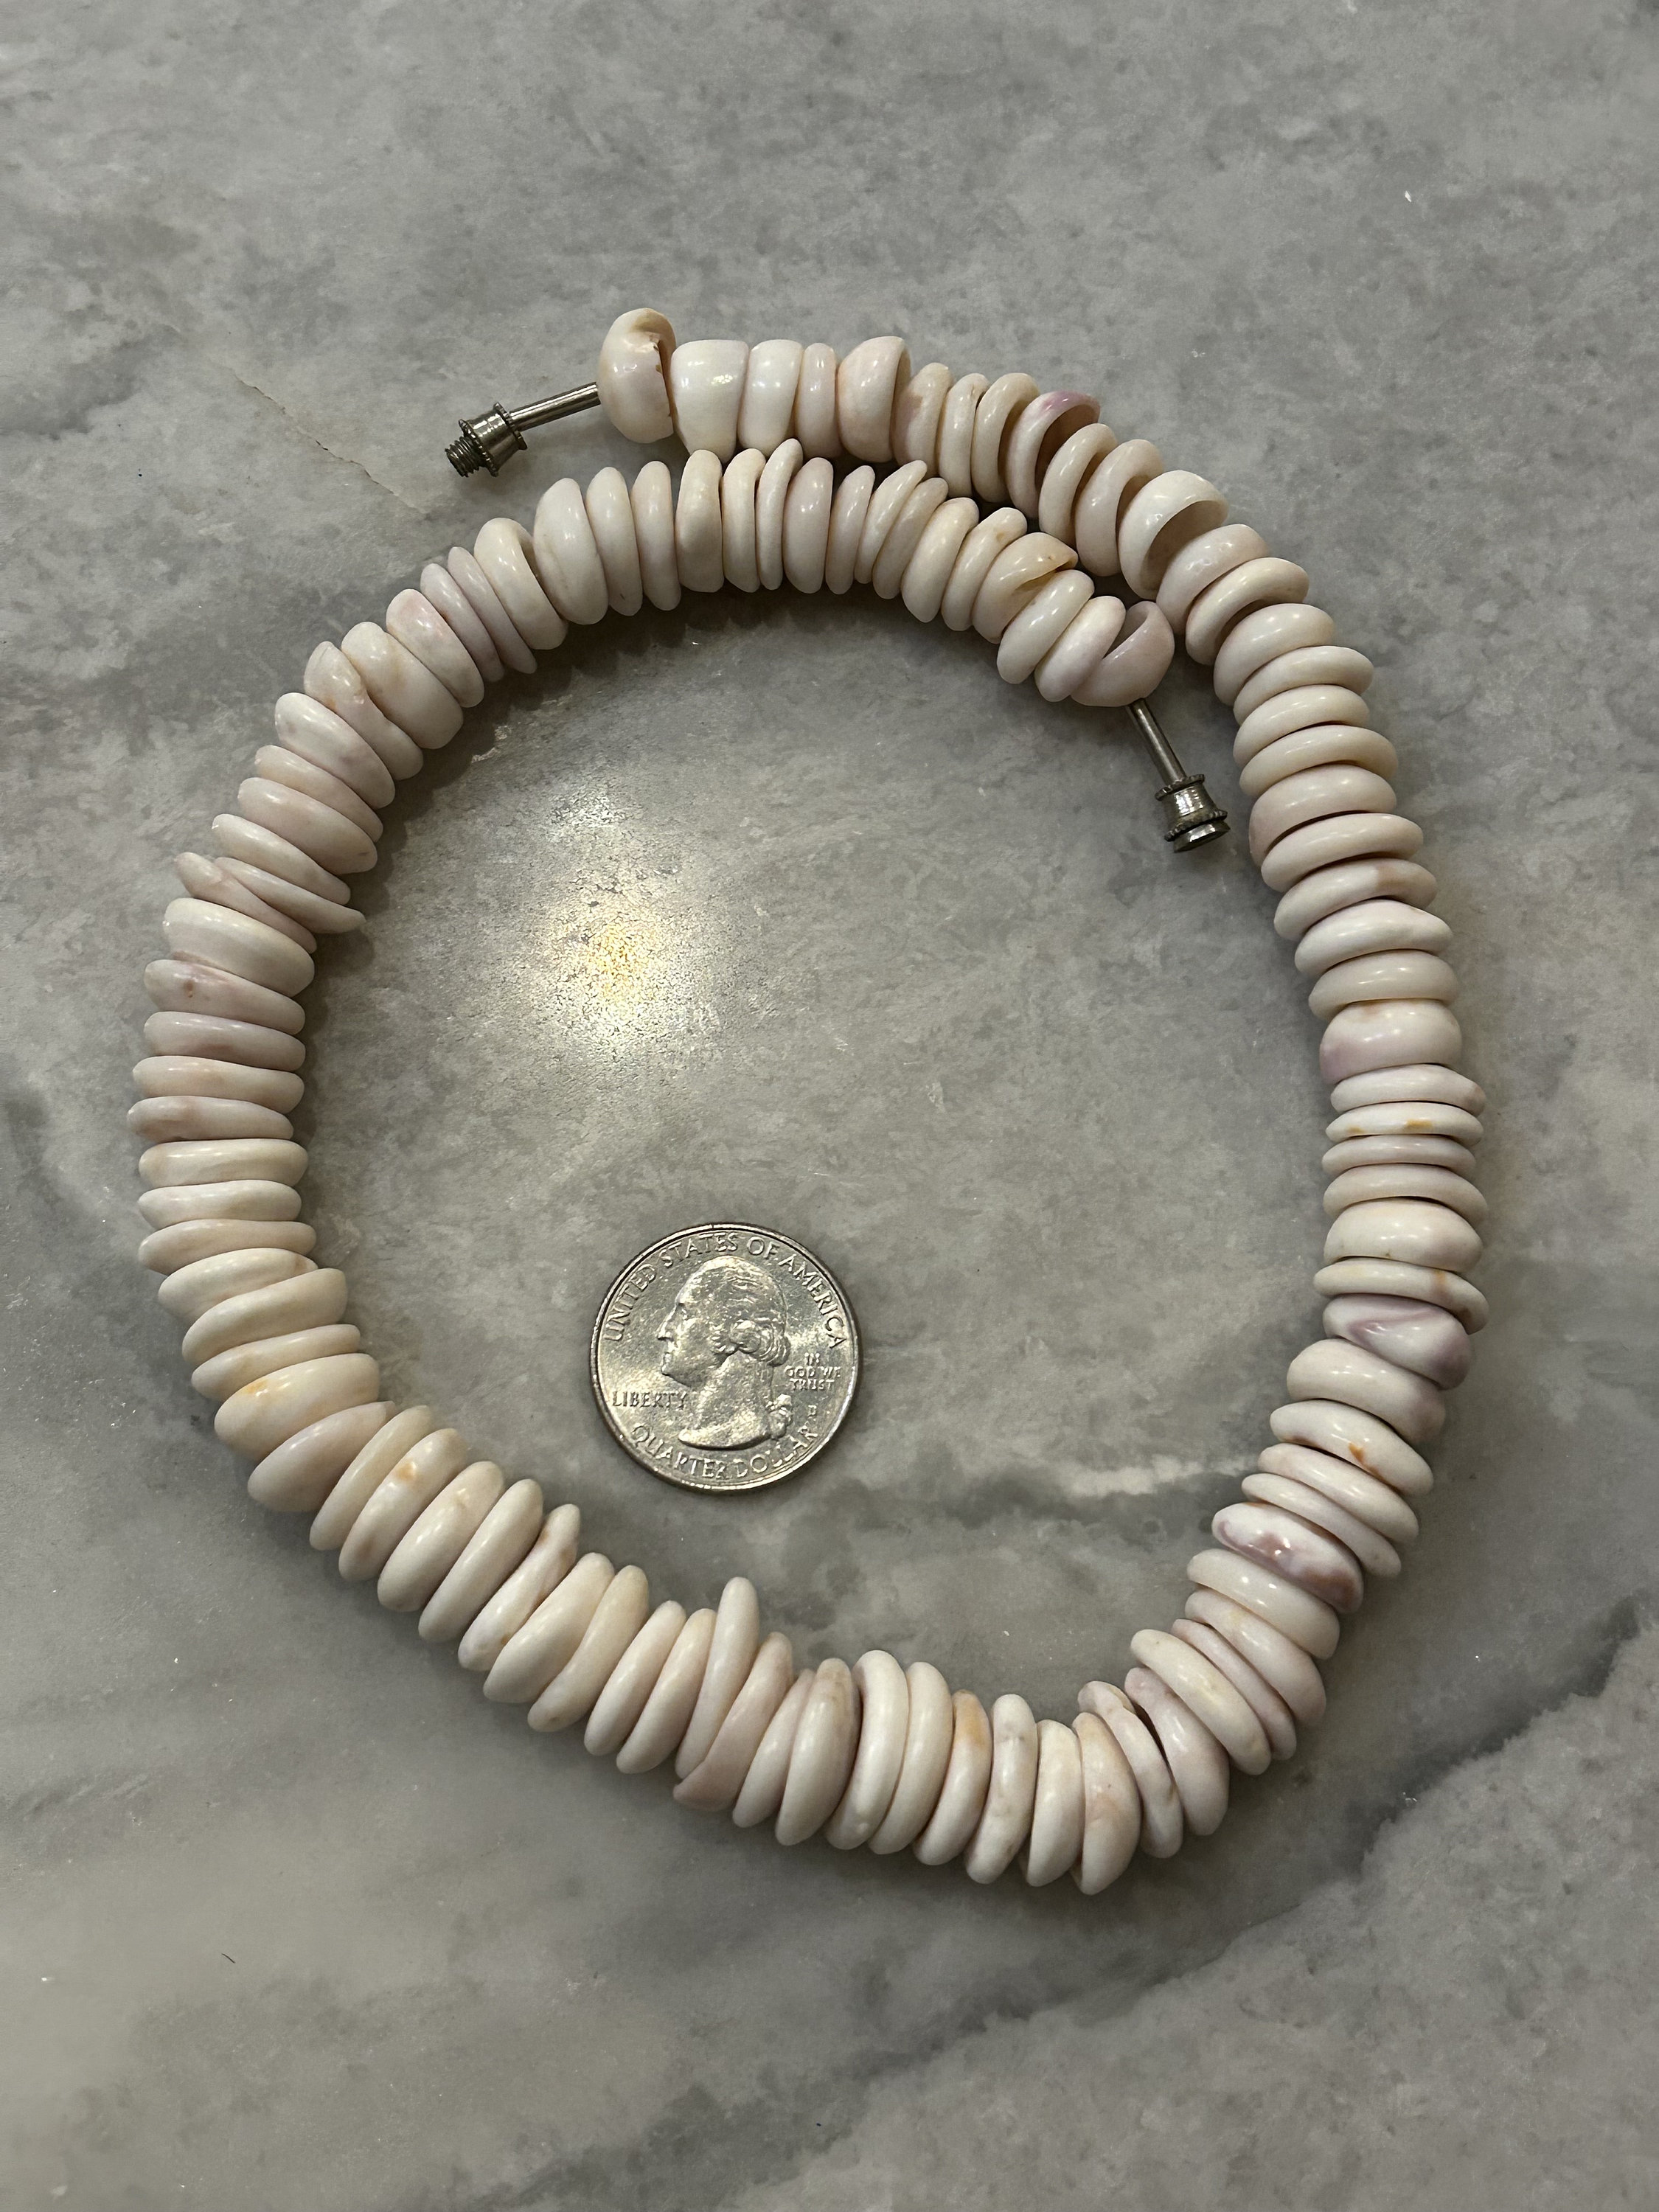 Vintage Puka Shell Necklace 18” Long | eBay